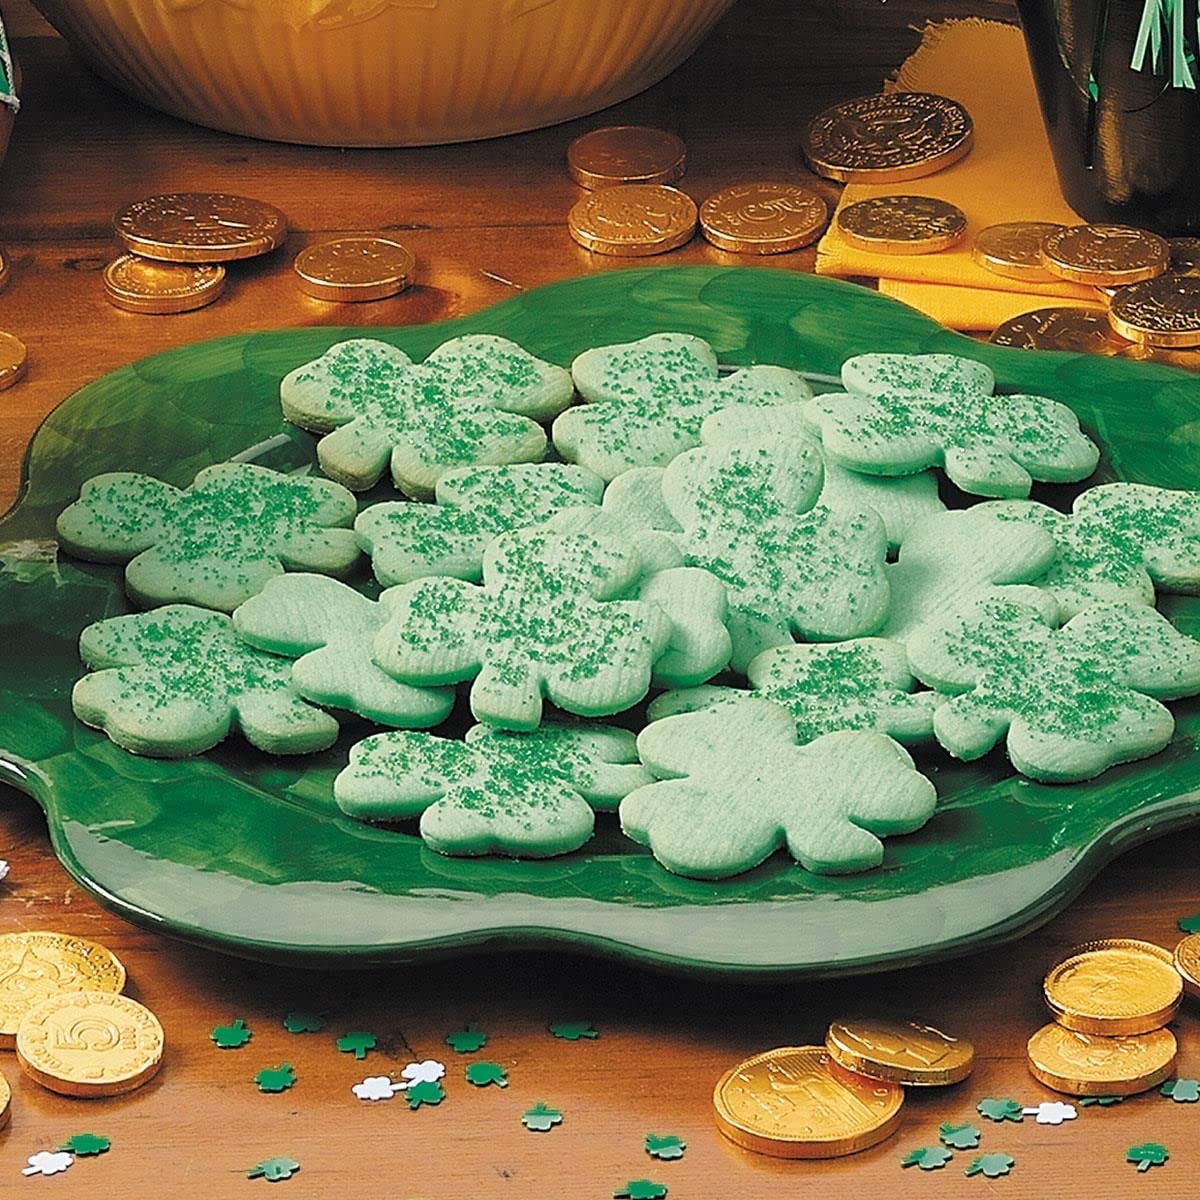 Clover Cookie Cutter Set, 4-Piece Patrick's Day Shamrock Cookie Cutter Set, Irish Holiday Party Supplies4'', 3.2'', 1.85'', 1.3''